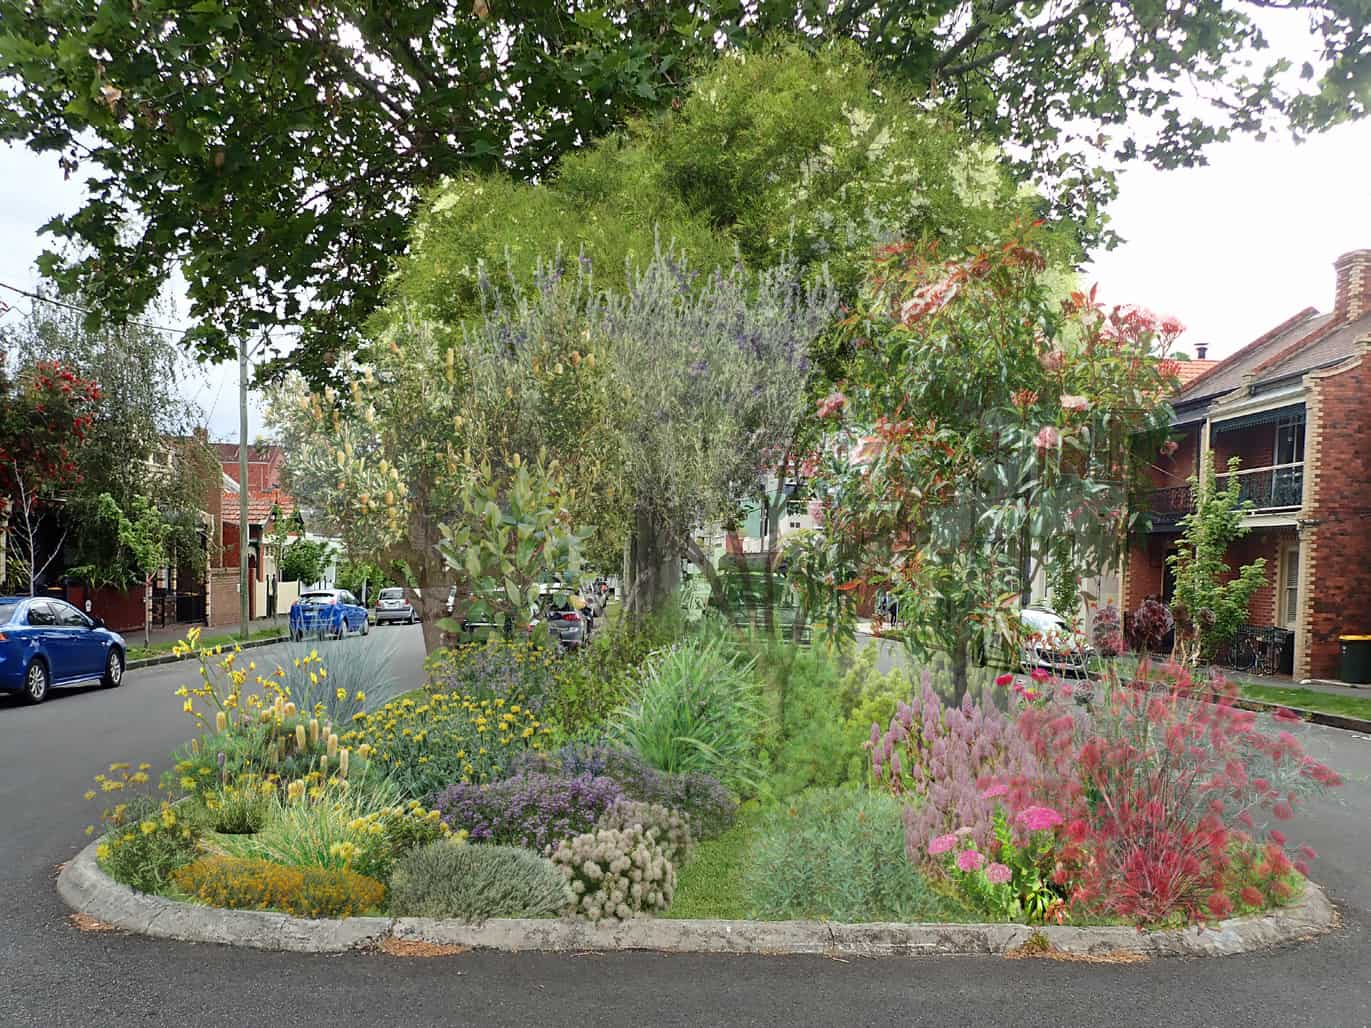 Plant garden island in residential street